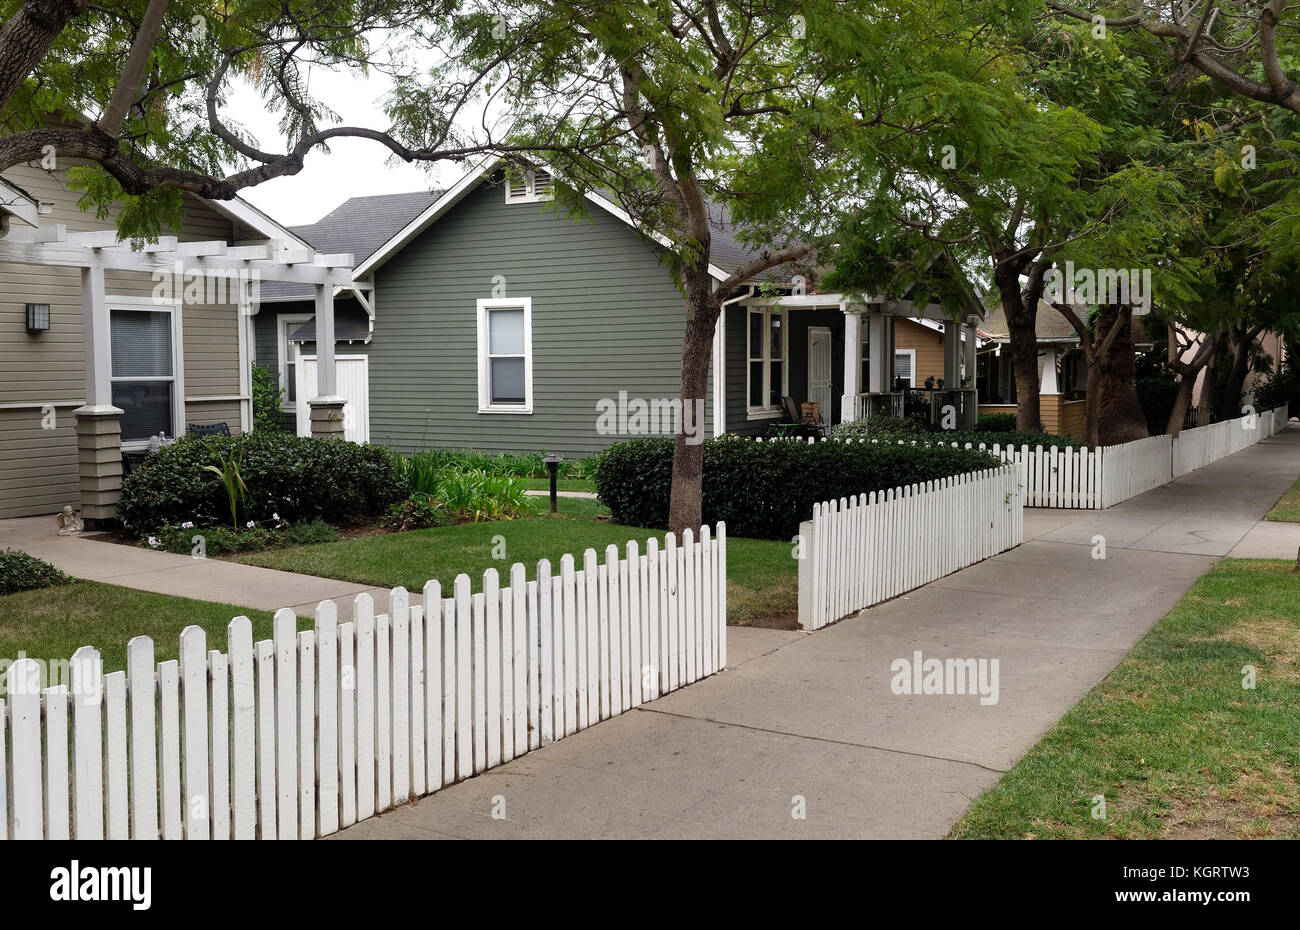 Residential neighborhood homes, picket fence, trees and sidewalk. Nobody. Stock Photo